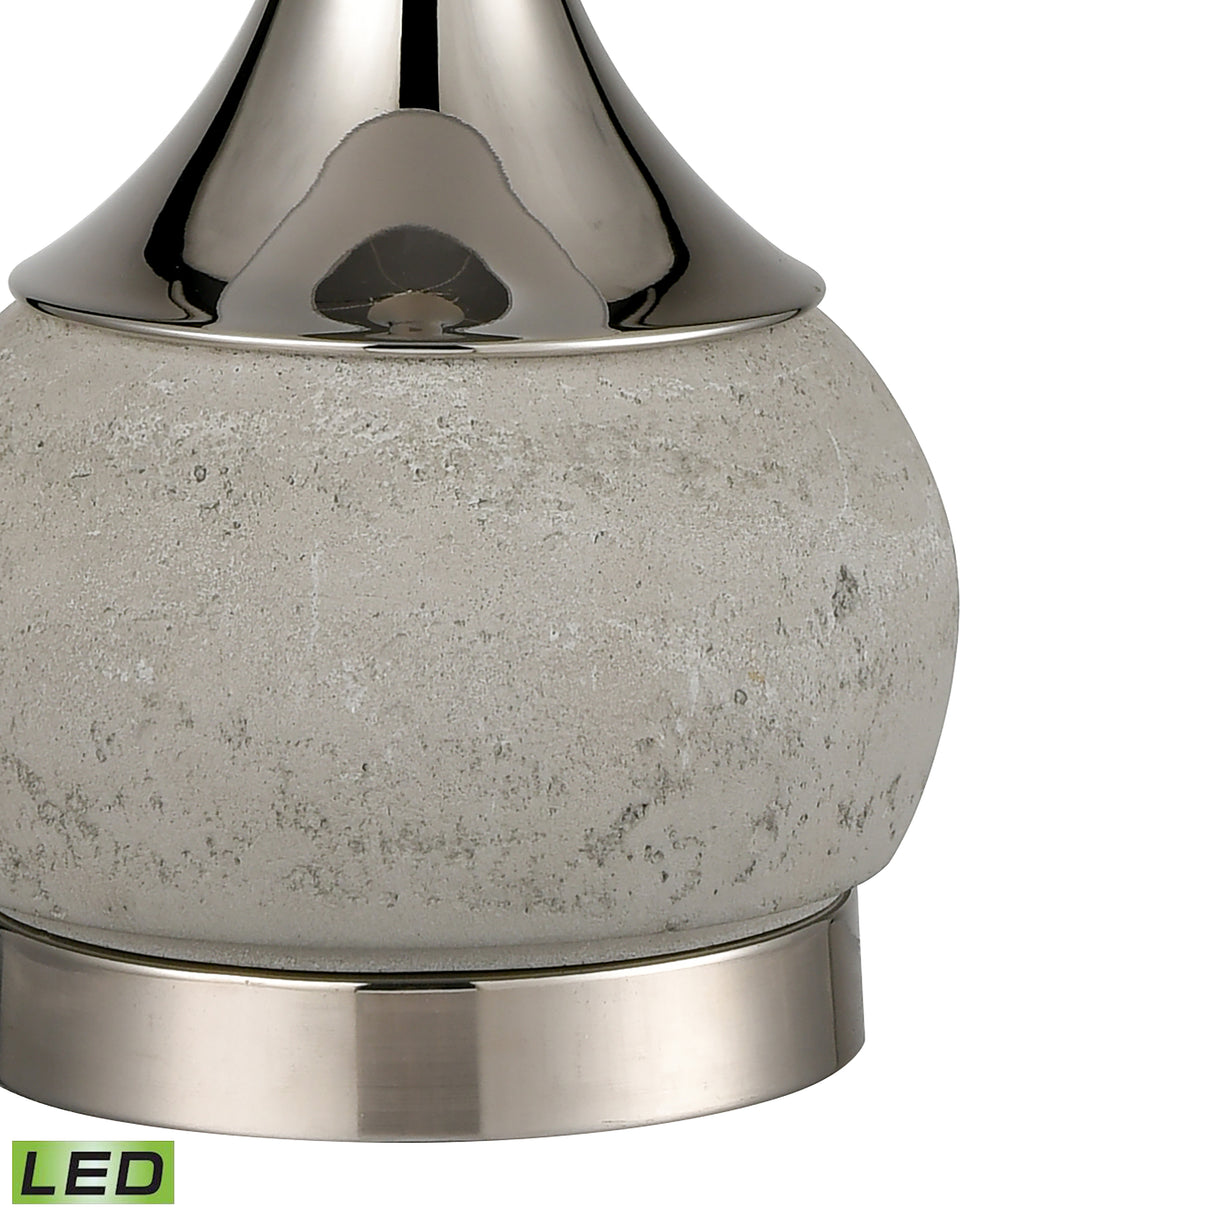 Elk 77133-LED Septon 29'' High 1-Light Table Lamp - Polished Concrete - Includes LED Bulb